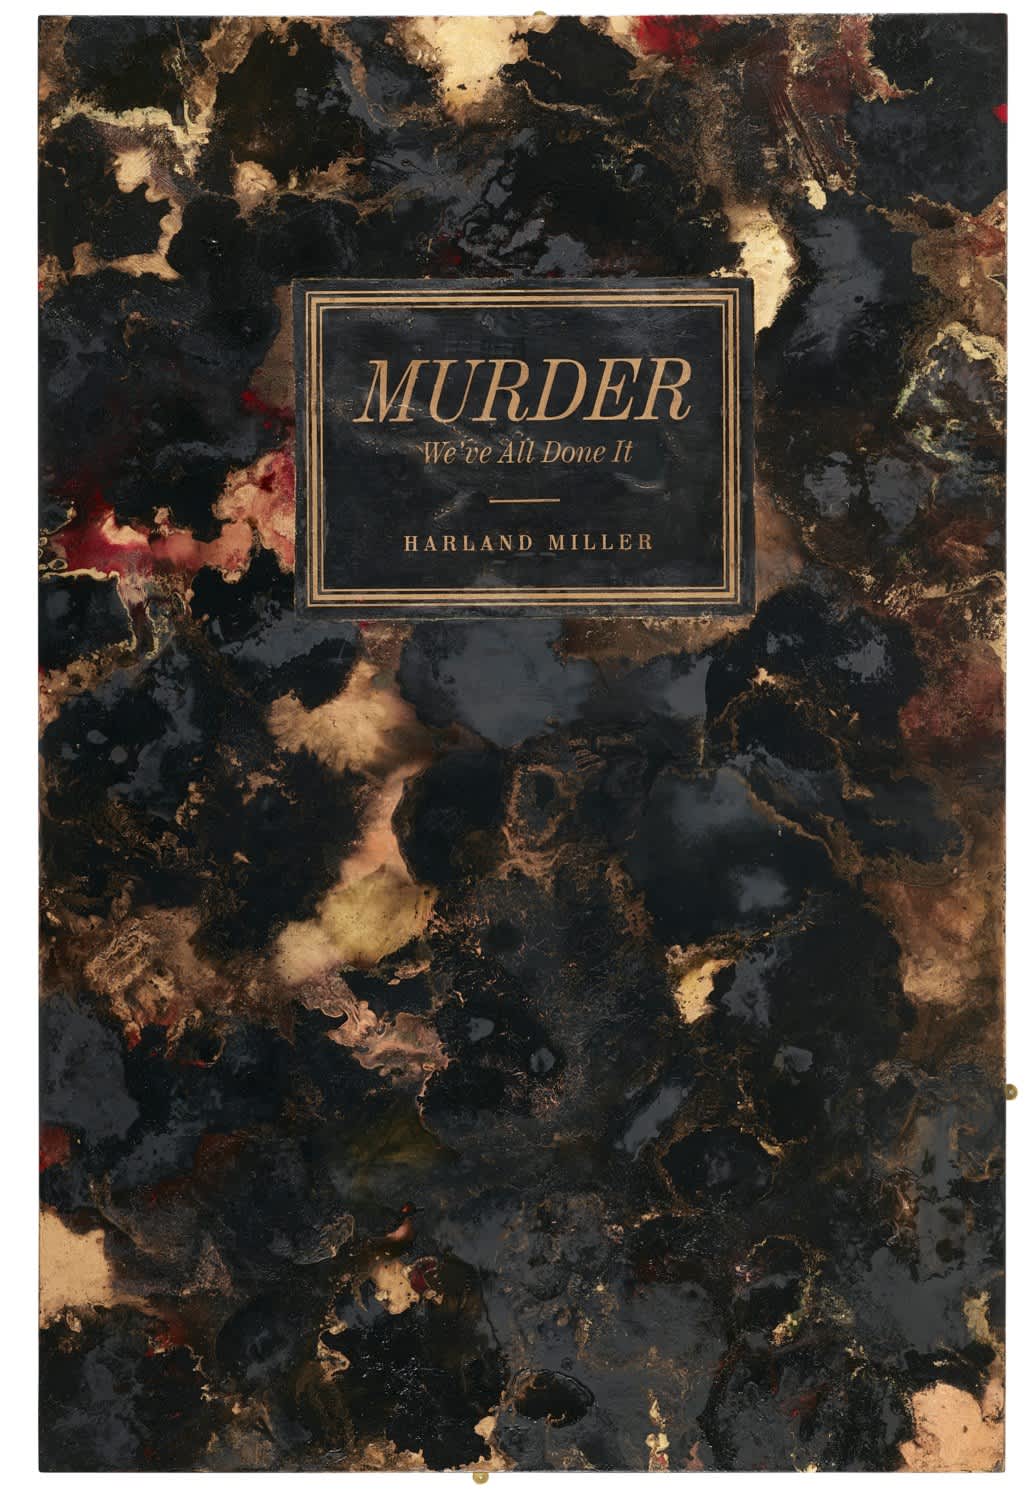 Harland Miller, Murder - We've All Done It, 2012